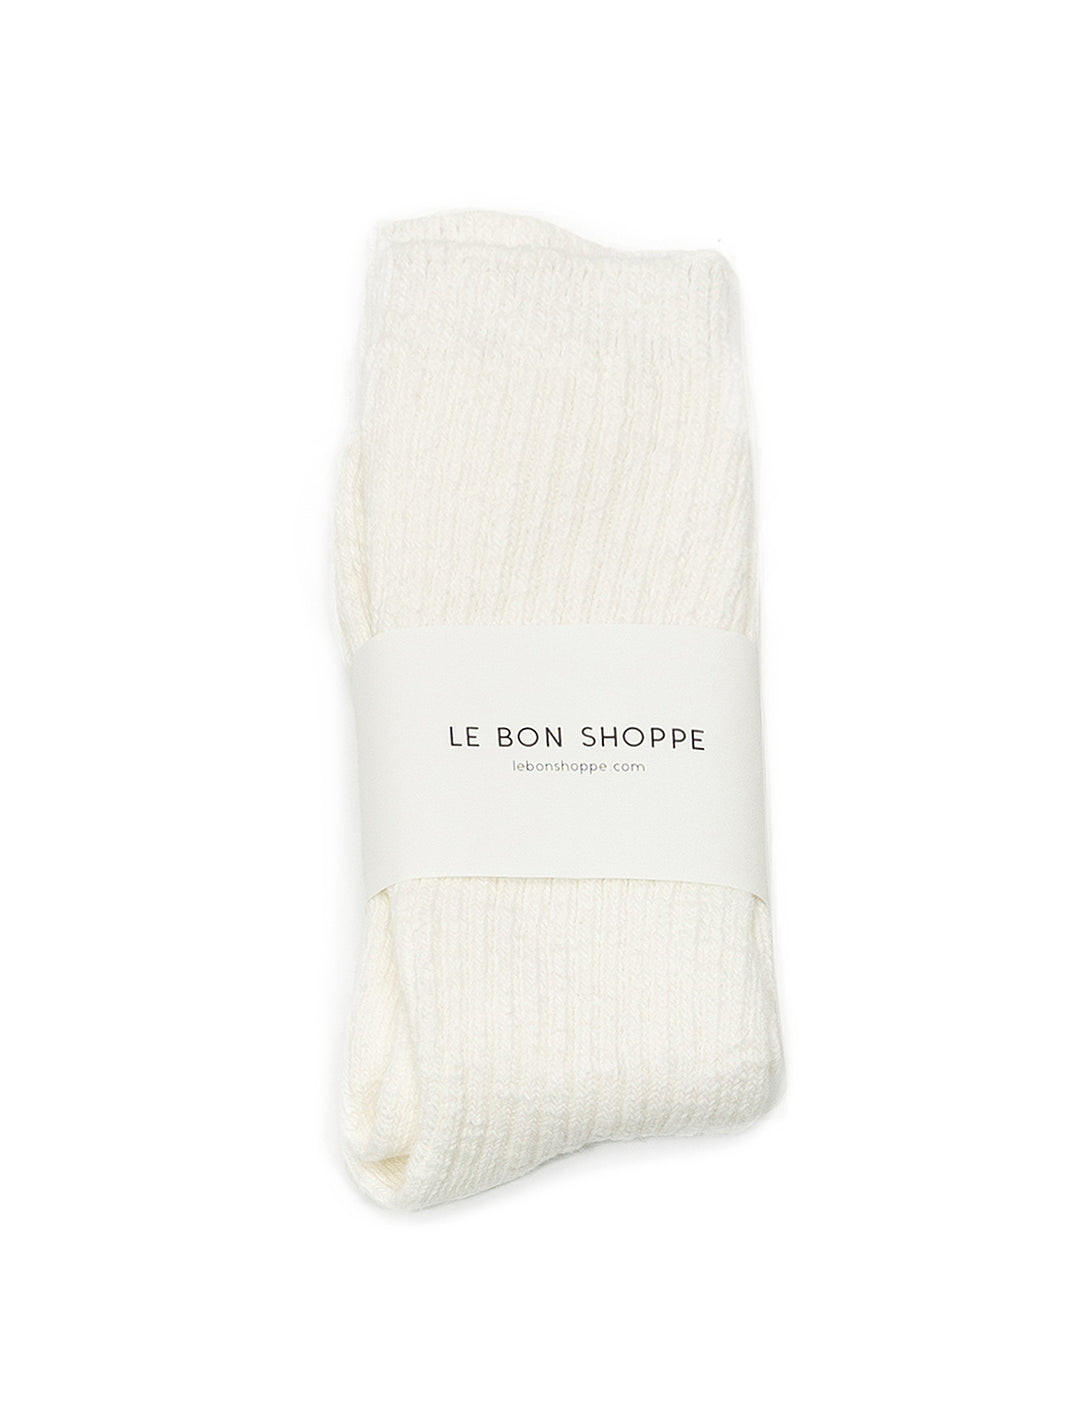 Front view of Le Bon Shoppe's cottage socks in white linen.